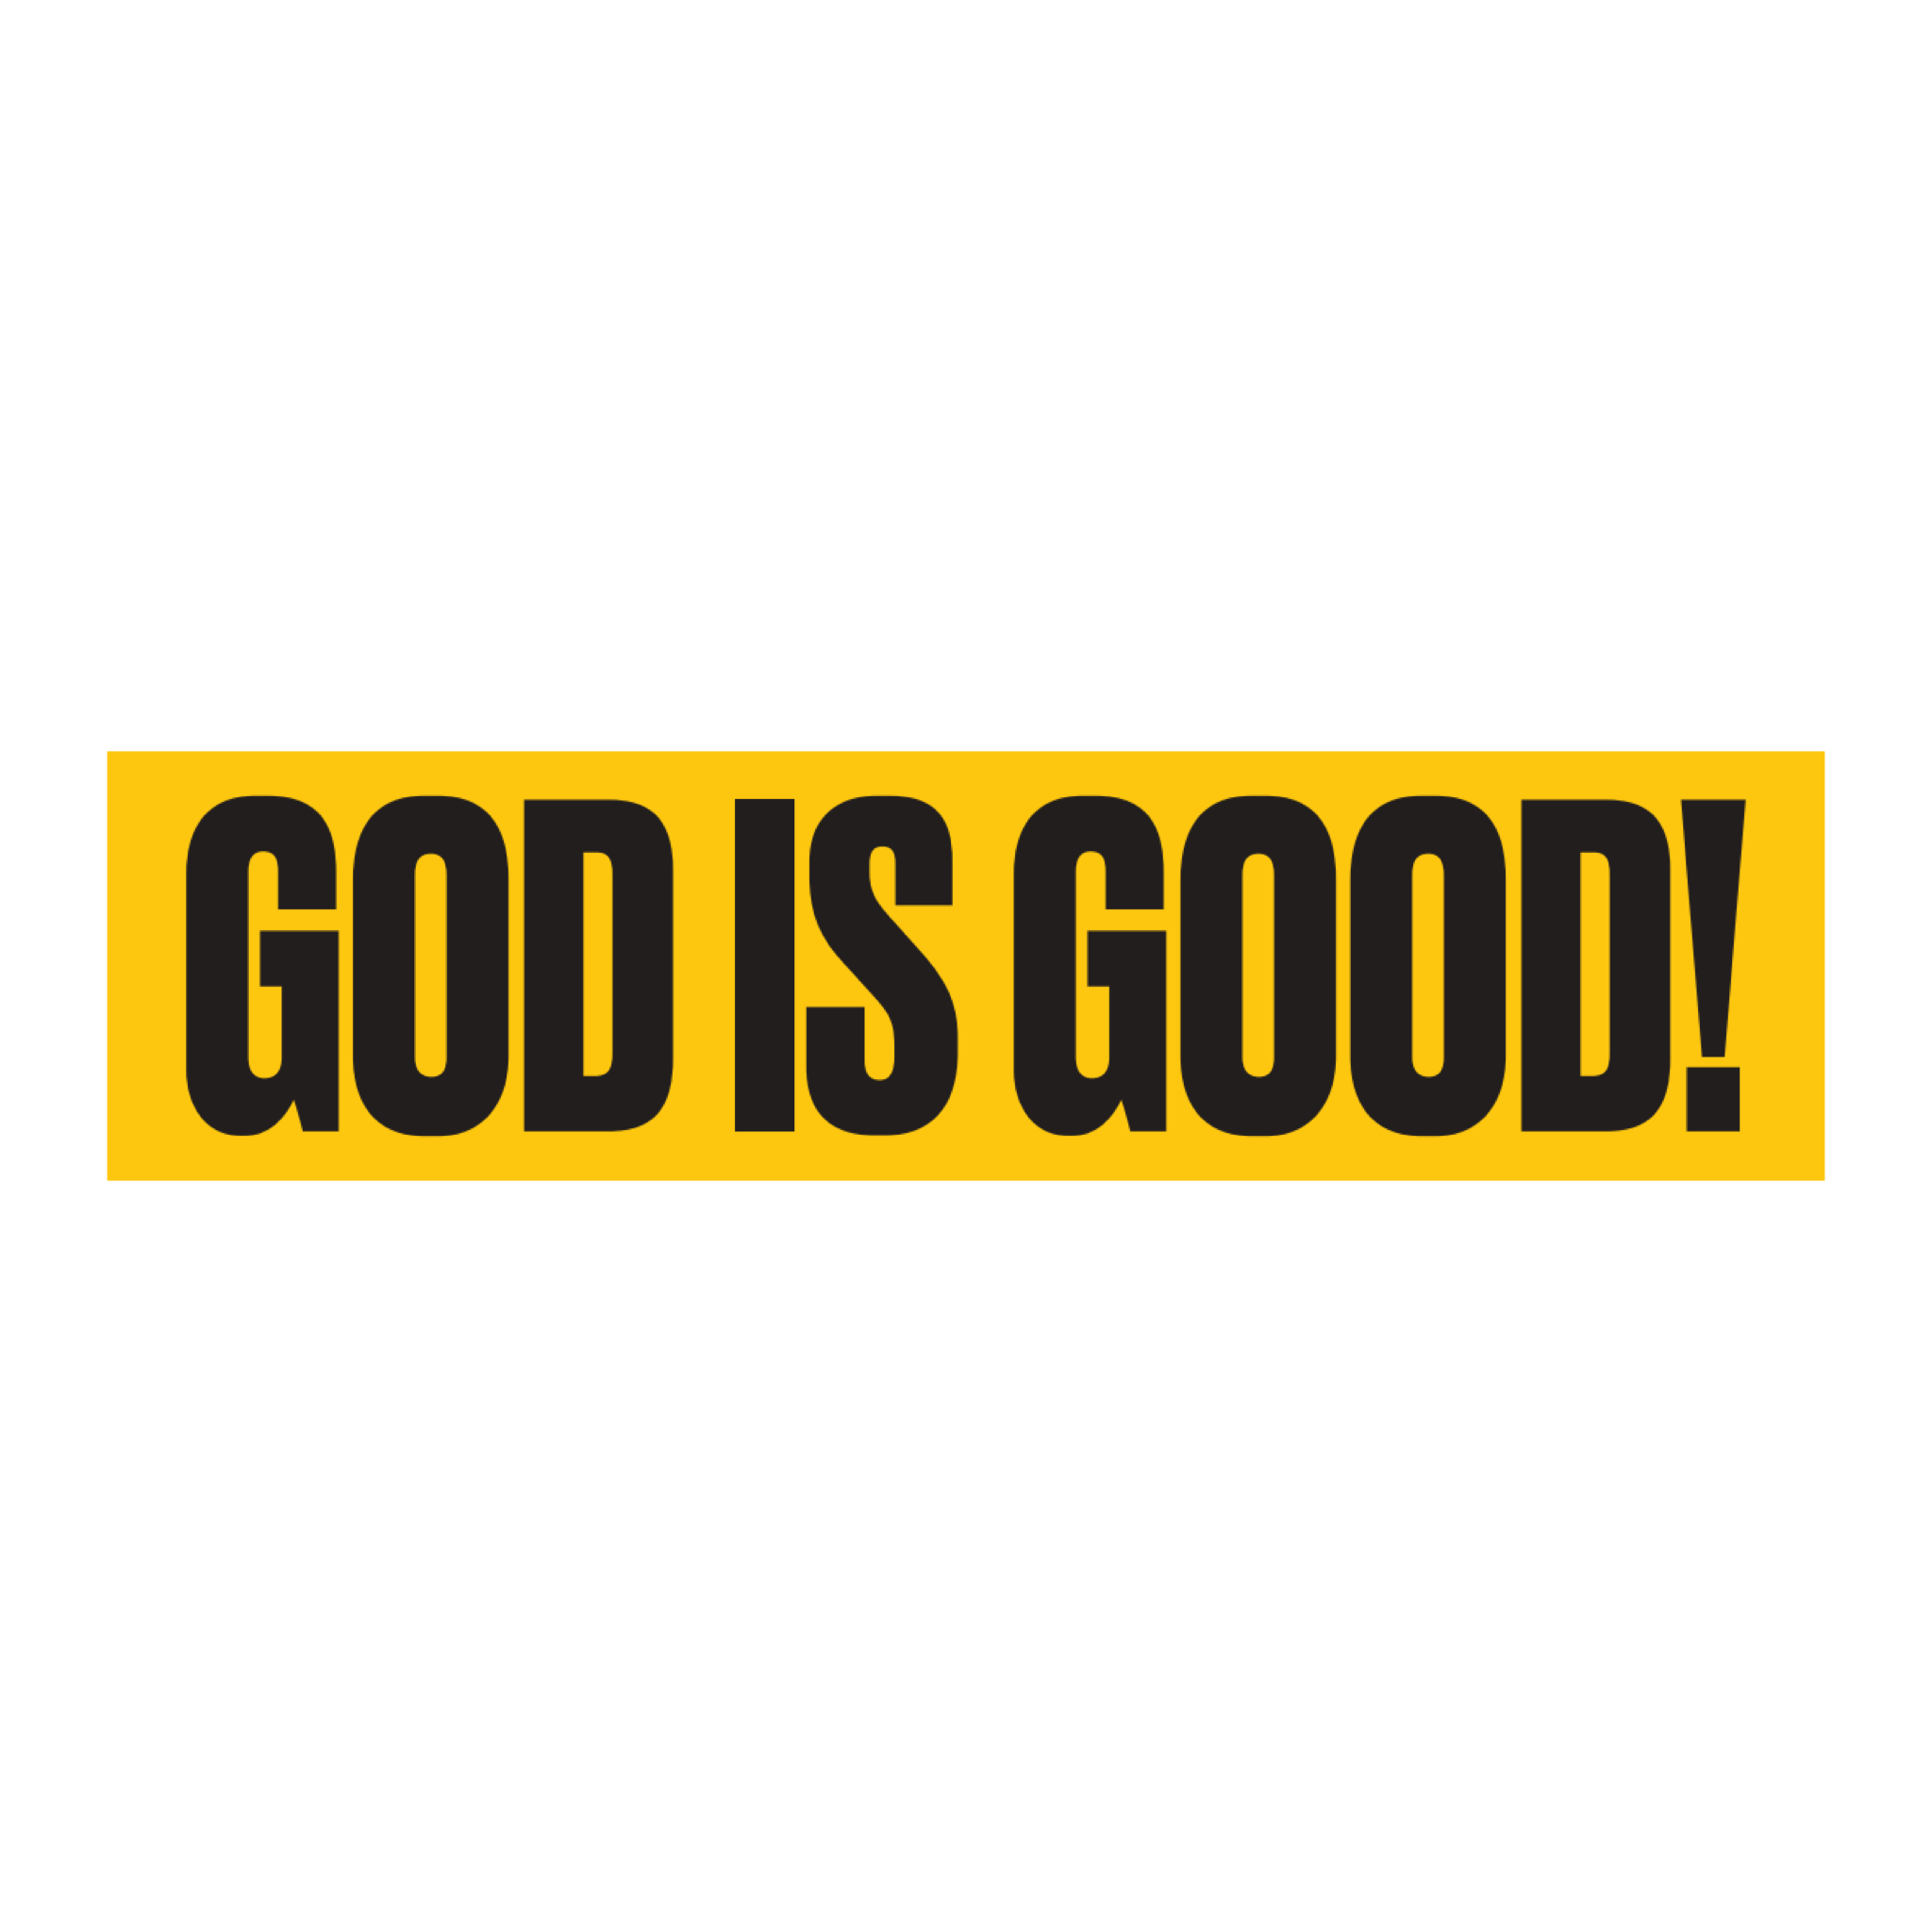 GOD IS GOOD! - STICKER